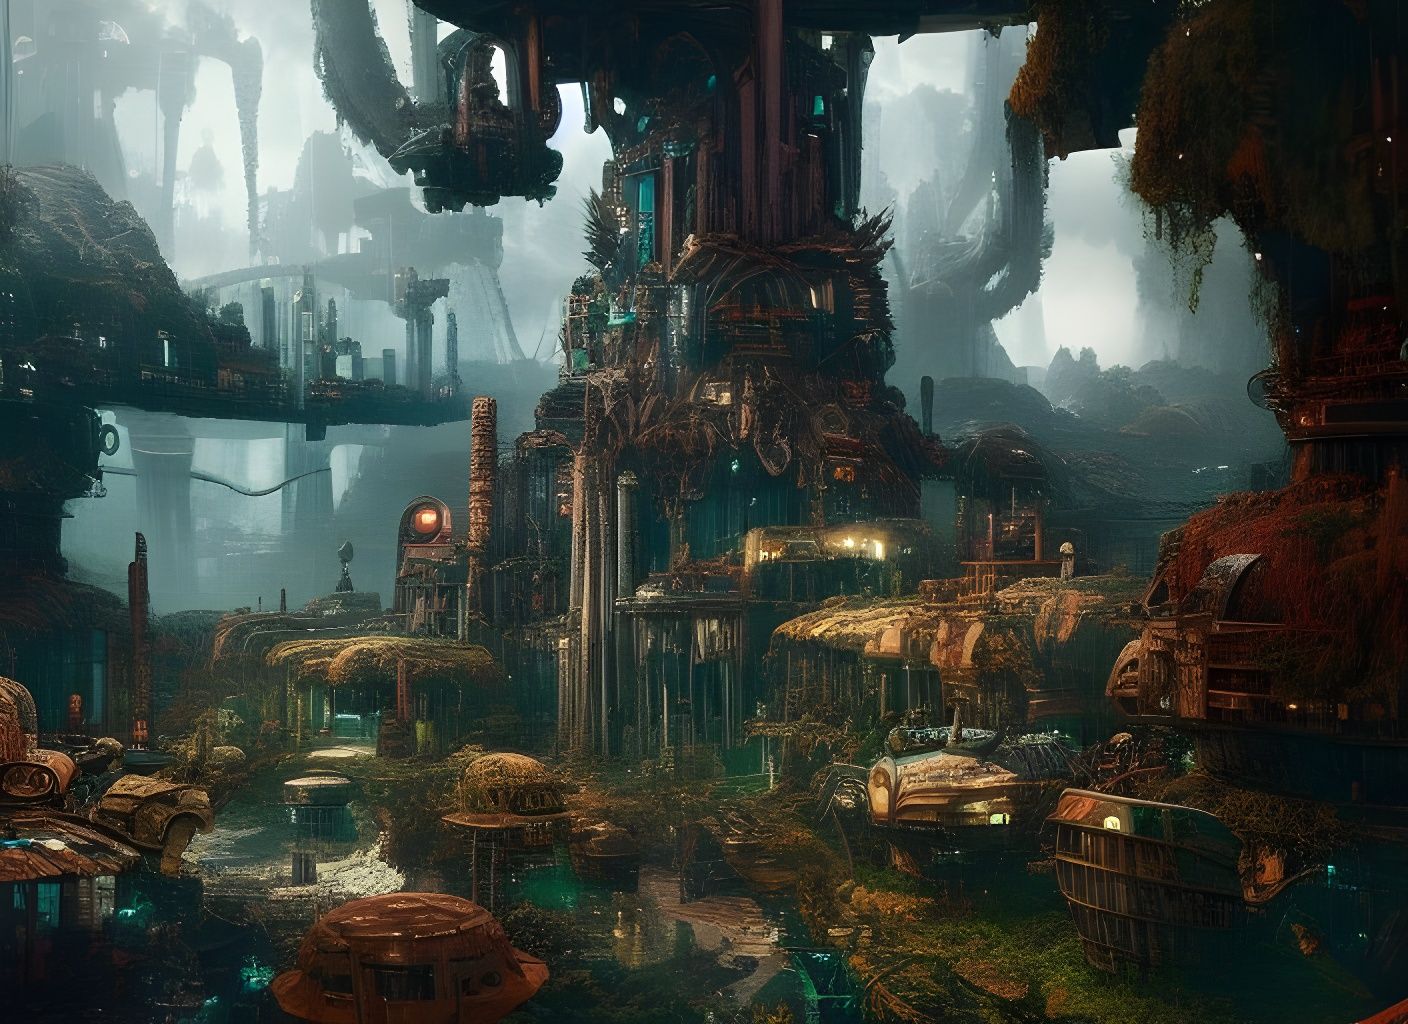 Hidden Village: Sci-Fi Fantasy Nature Photographer